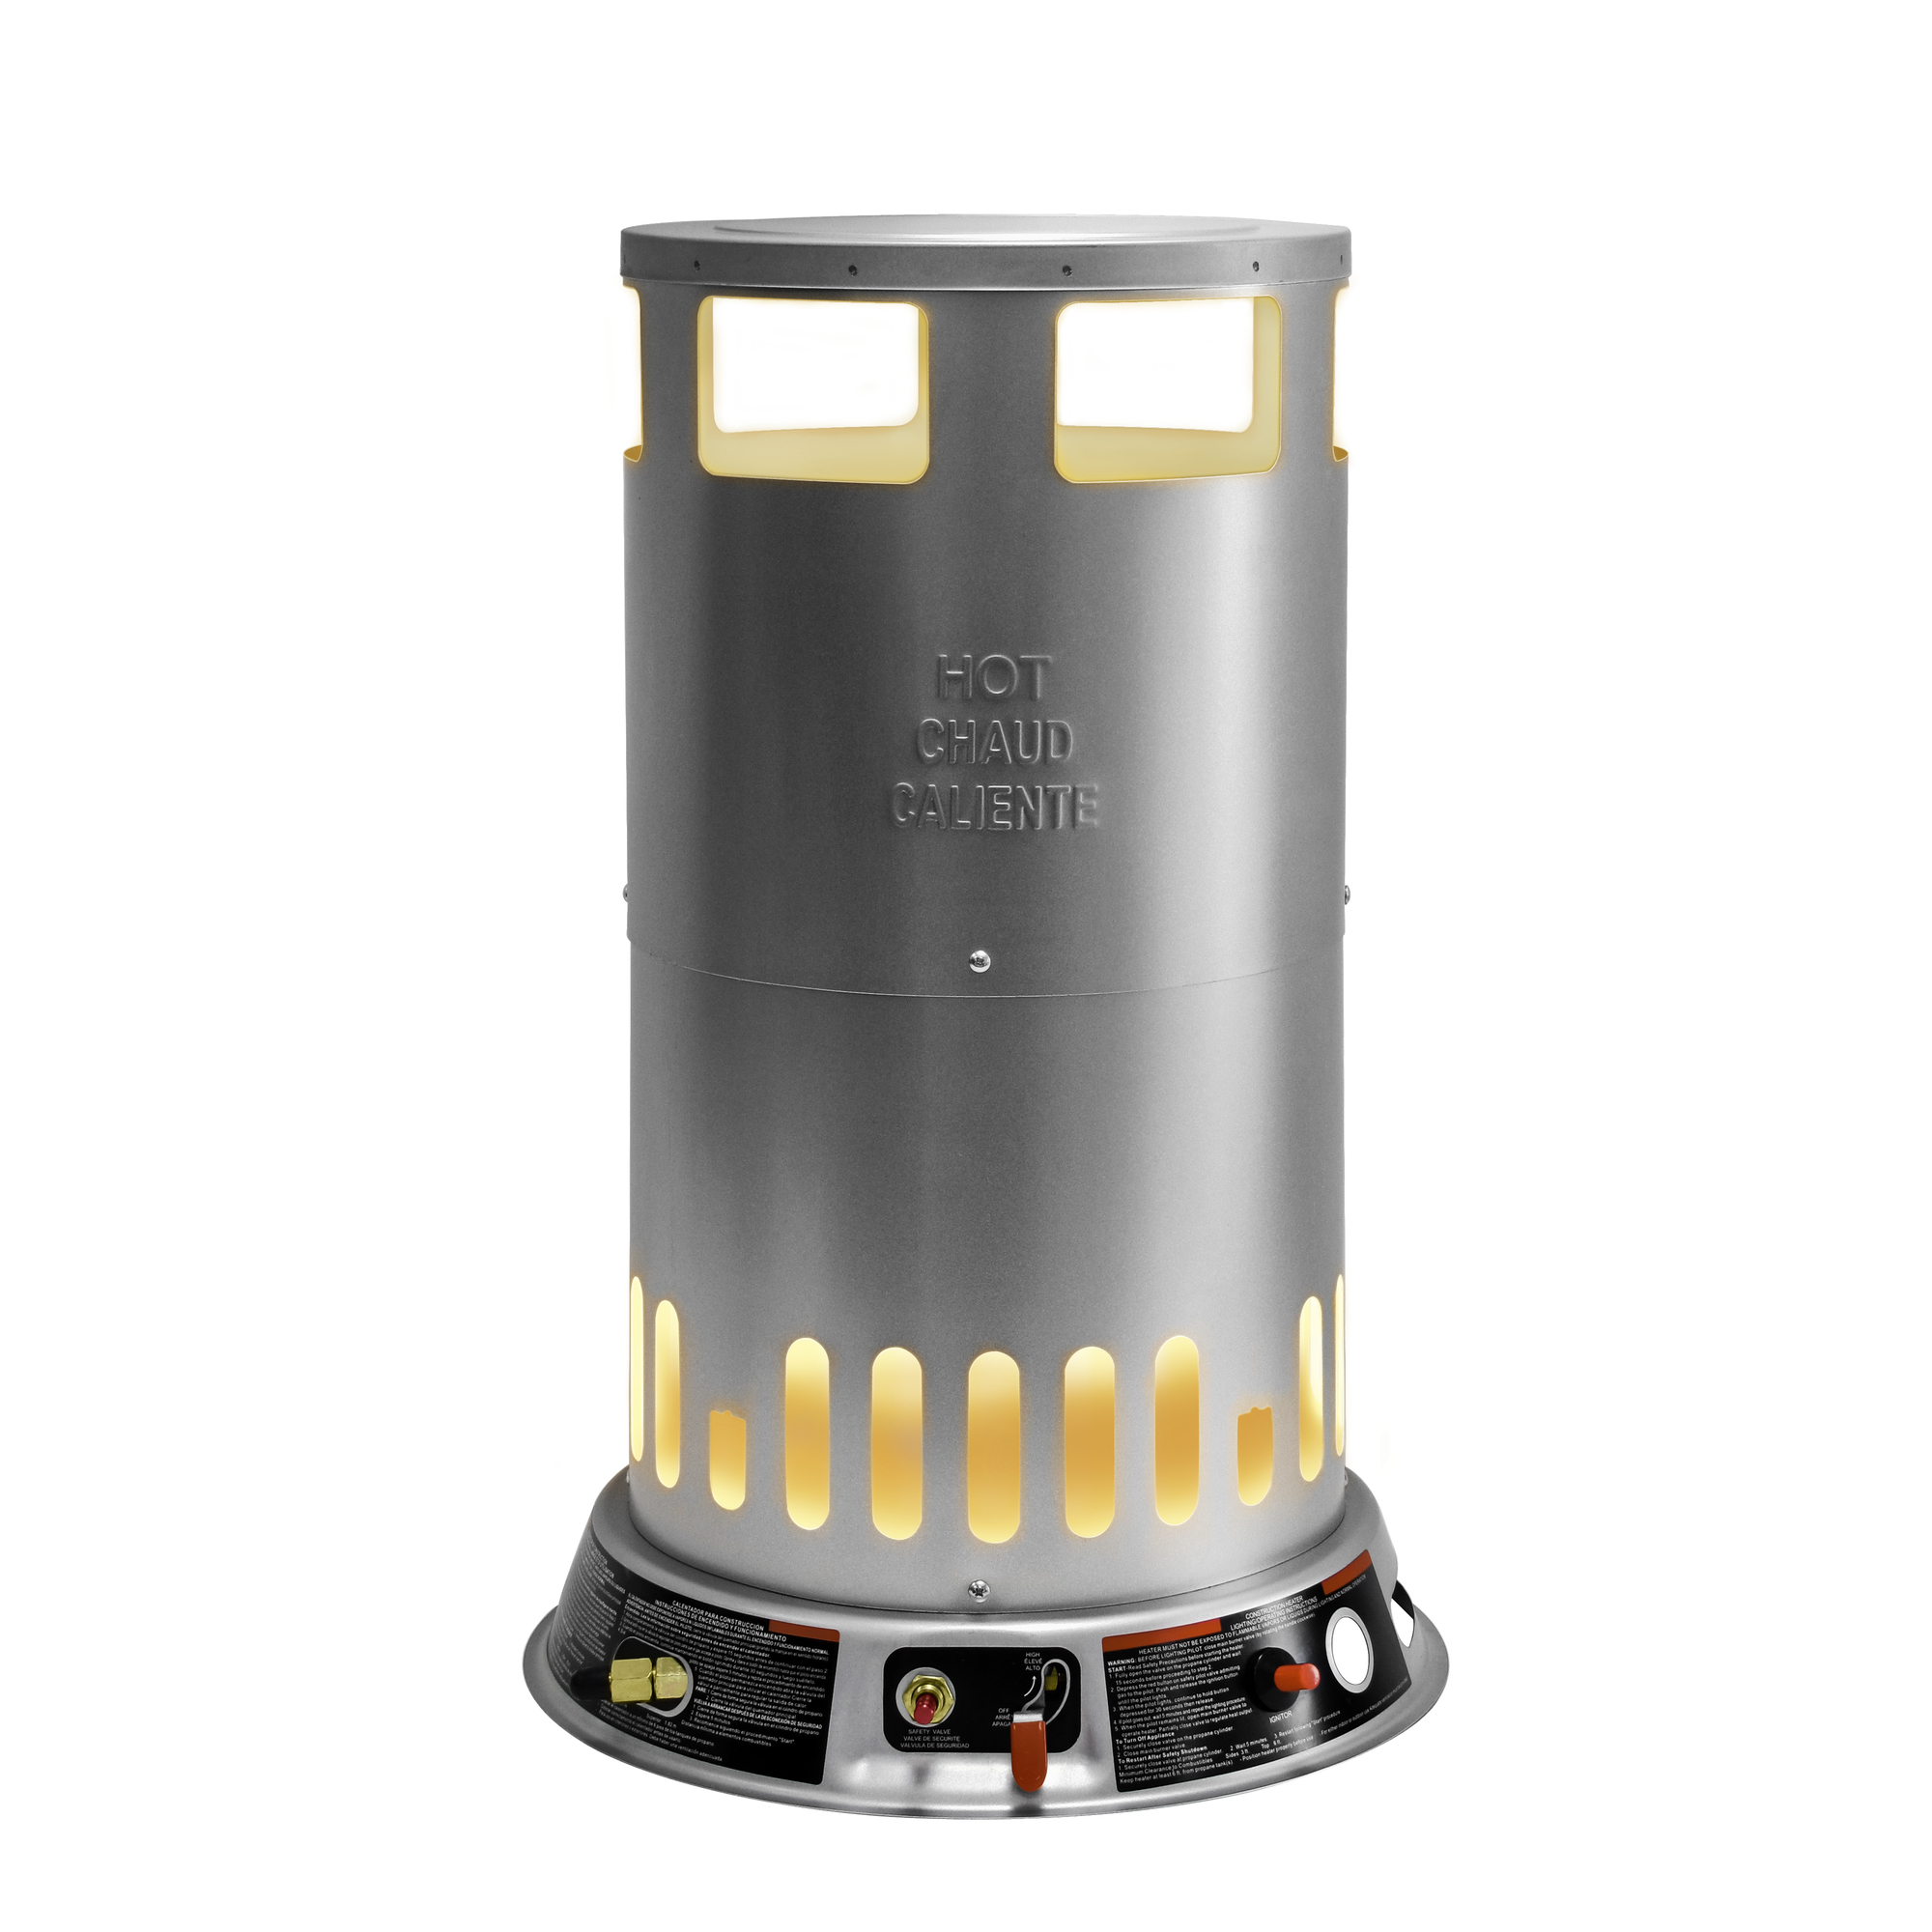 Dyna Glo, 200000-BTU Portable Convection Heater-LP, Fuel Type Propane, Max. Heat Output 200000 Btu/hour, Model RMC-LPC200DG